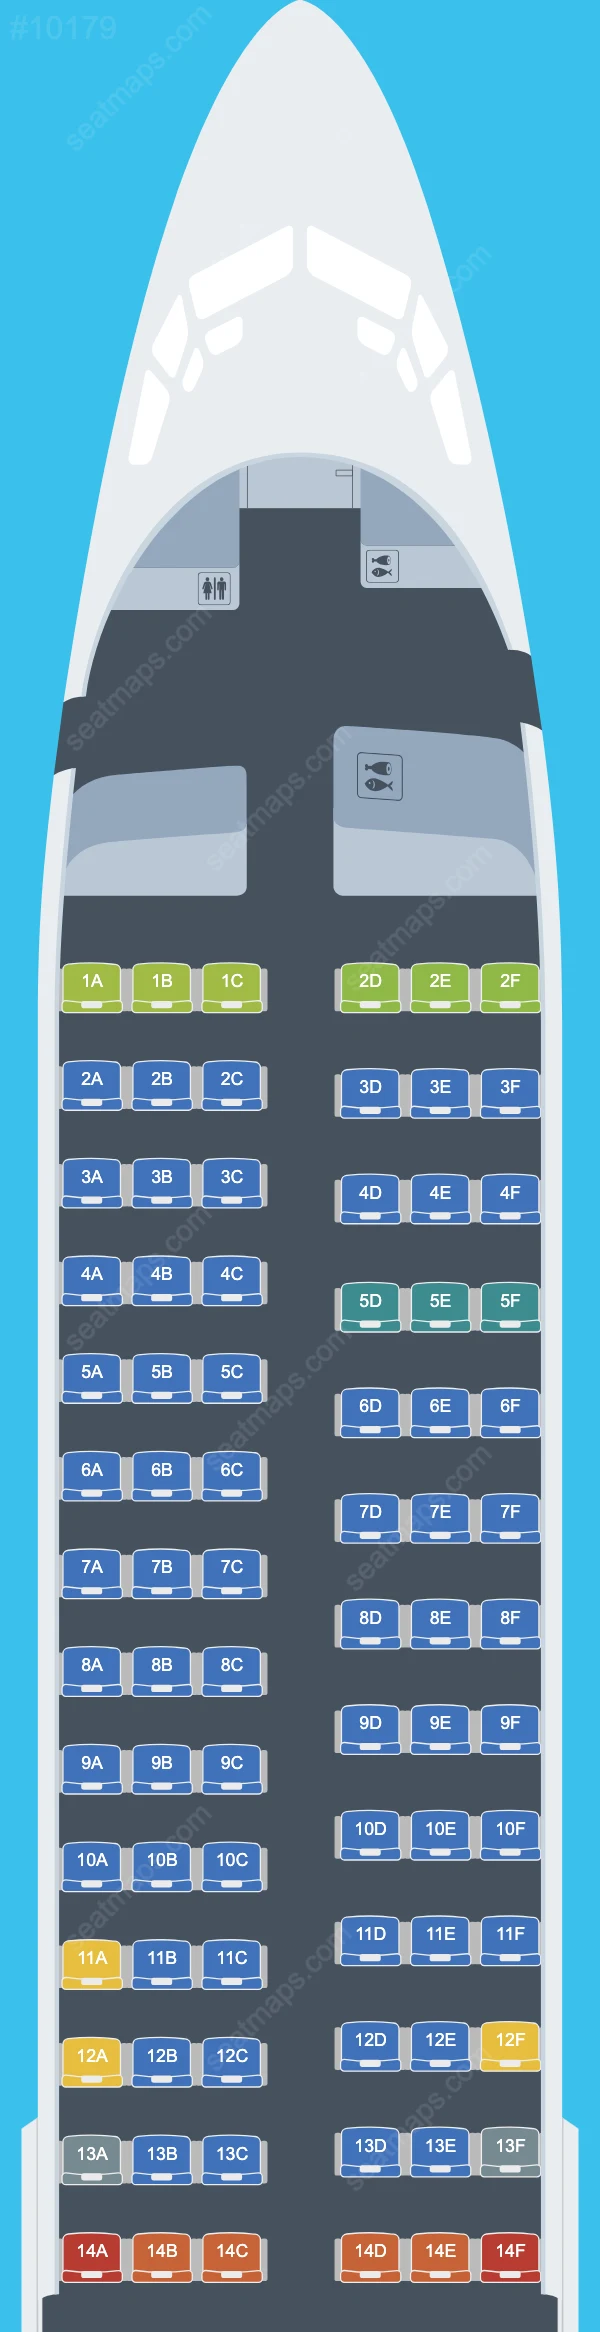 SkyUp Airlines Boeing 737 Plan de Salle 737-800